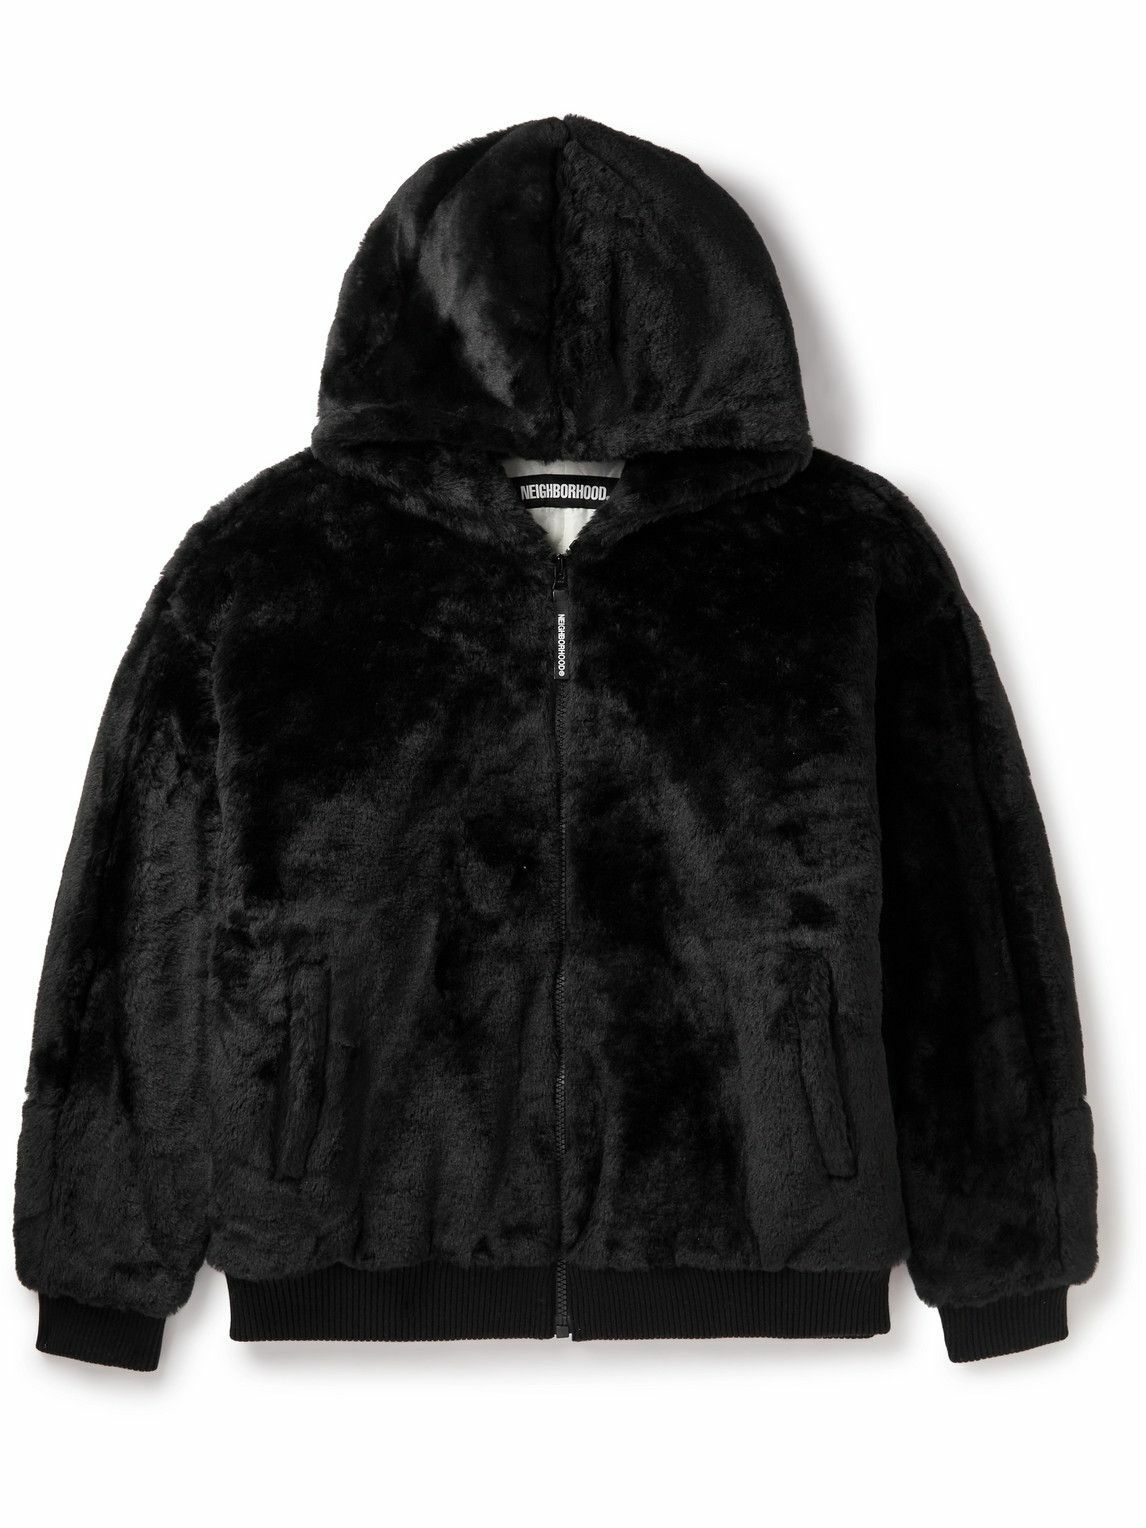 Neighborhood - Padded Faux Fur Hooded Jacket - Black Neighborhood